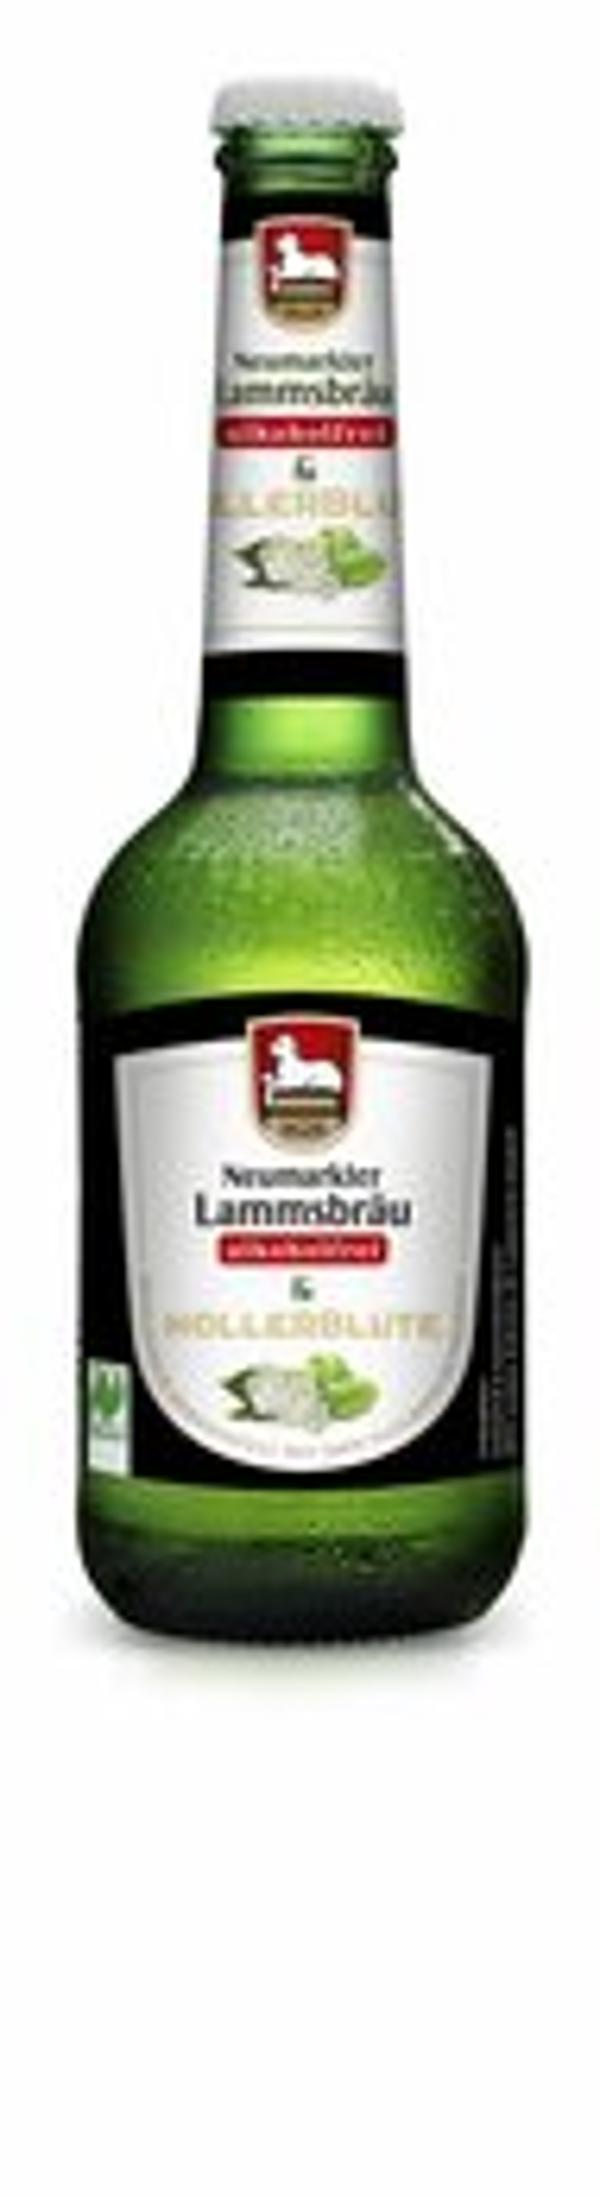 Produktfoto zu Lammsbräu alkohlfrei Hollunderblüte 0,33L